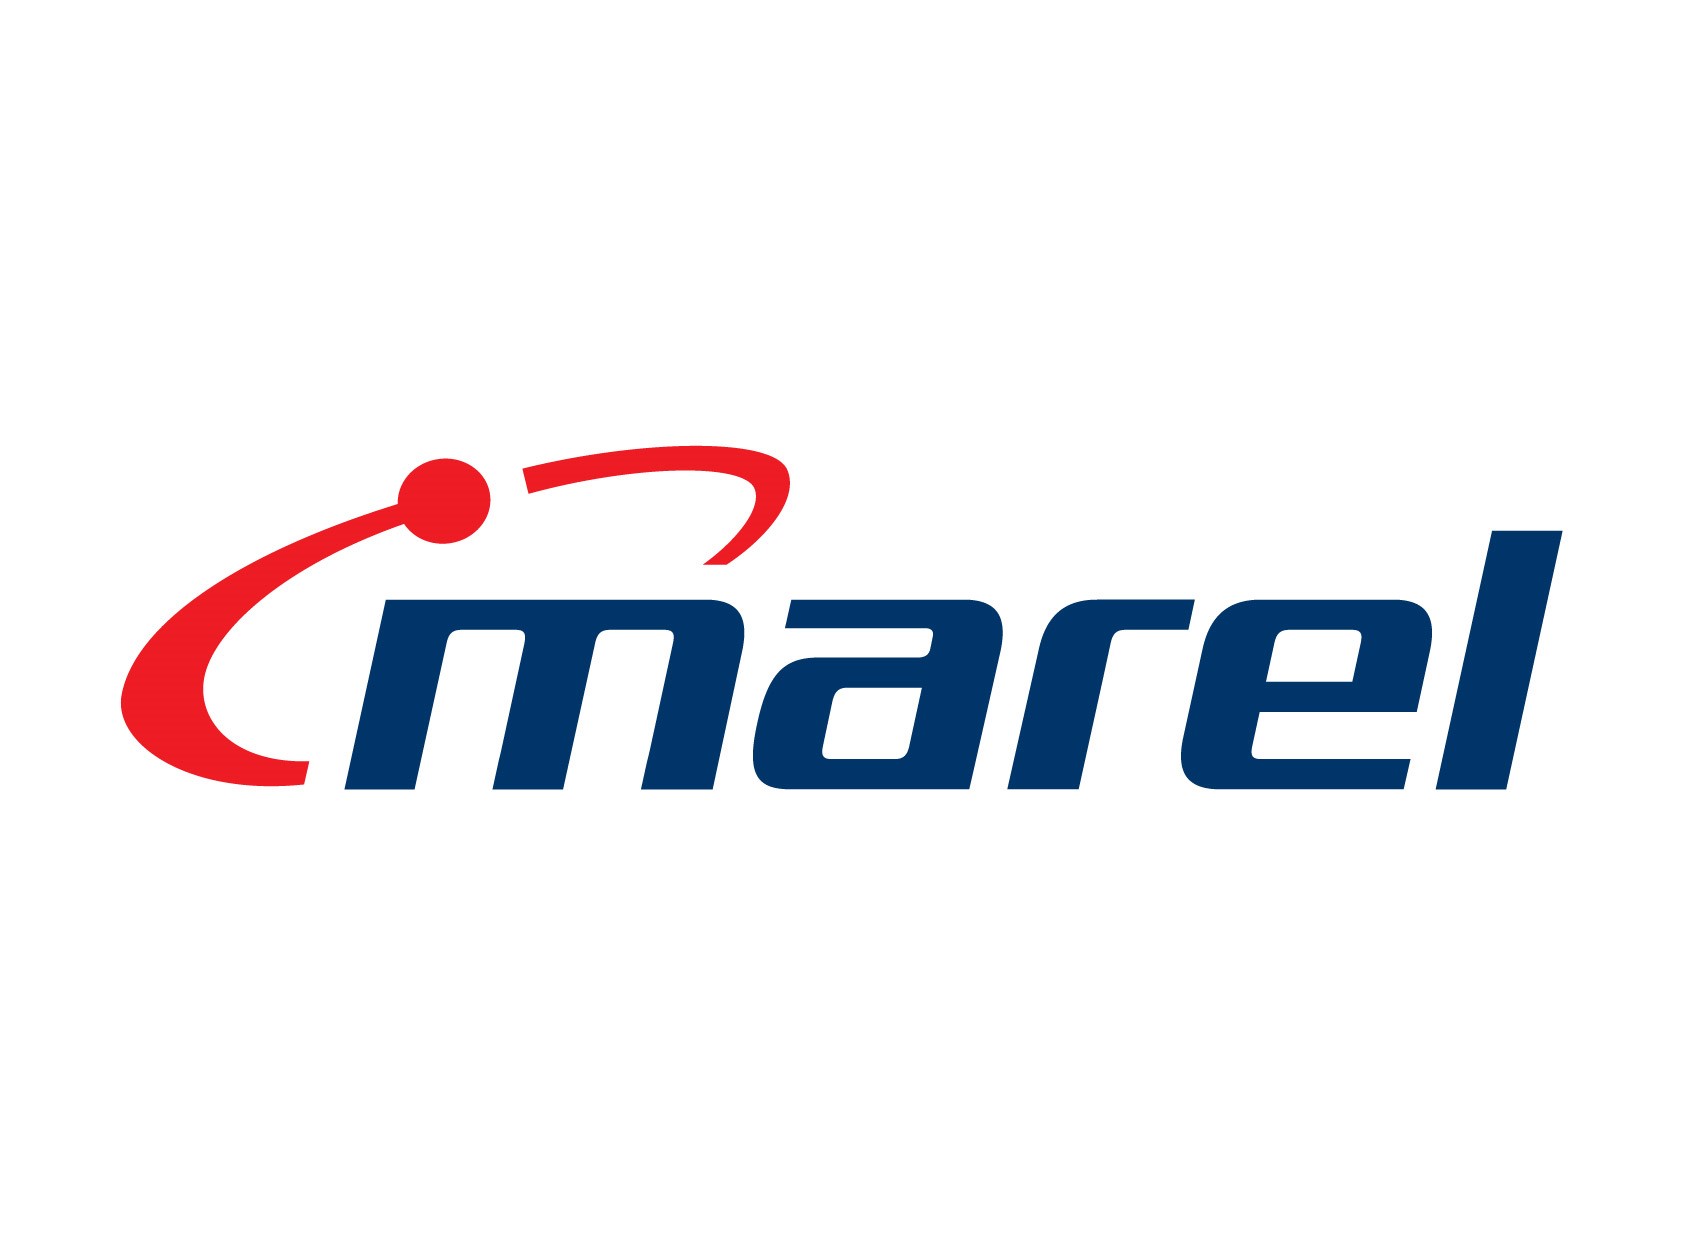 Logo Marel - pixel